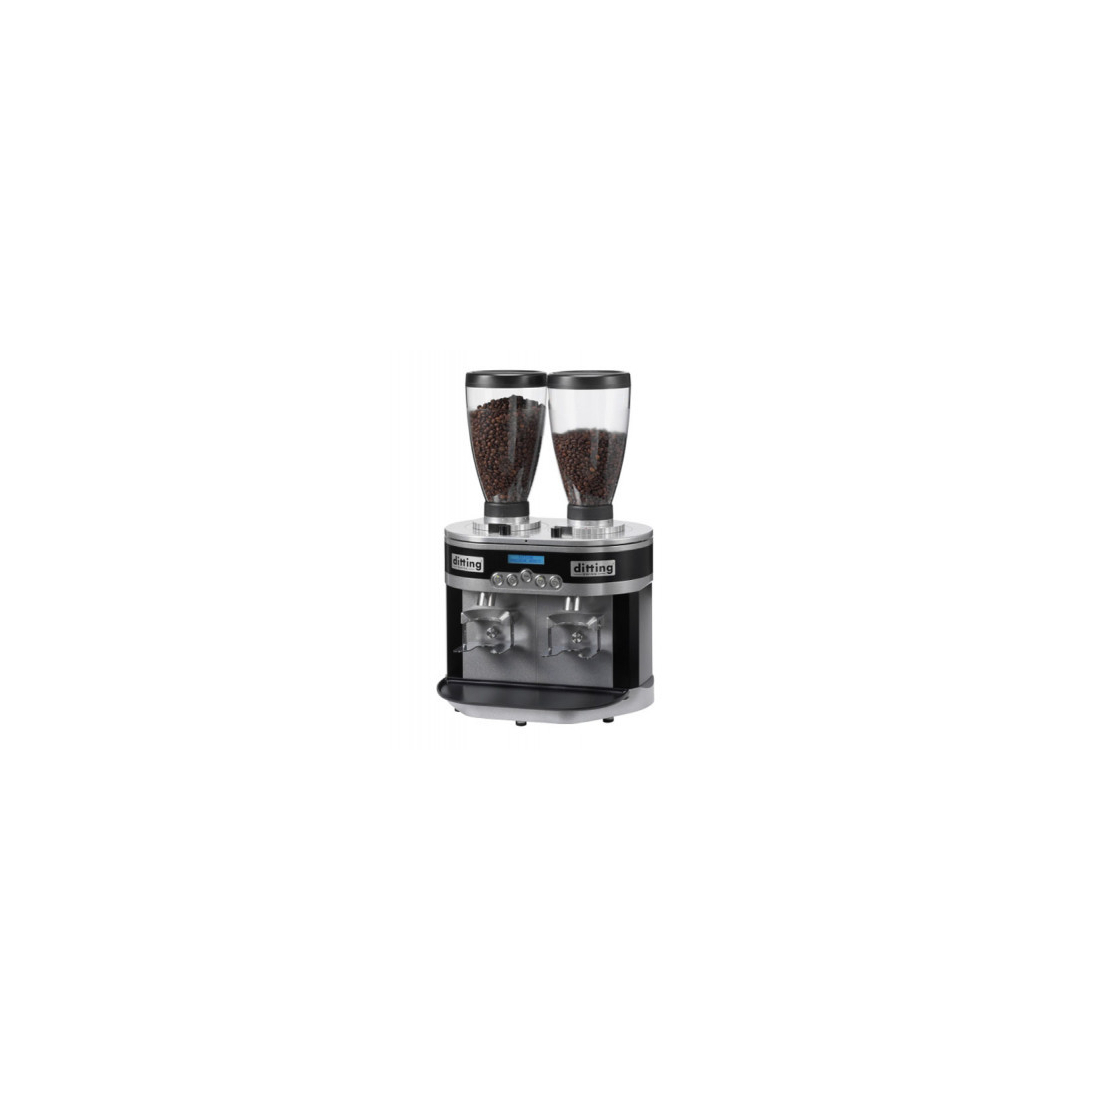 Ditting ,KED 640, Double Hopper Espresso Grinder